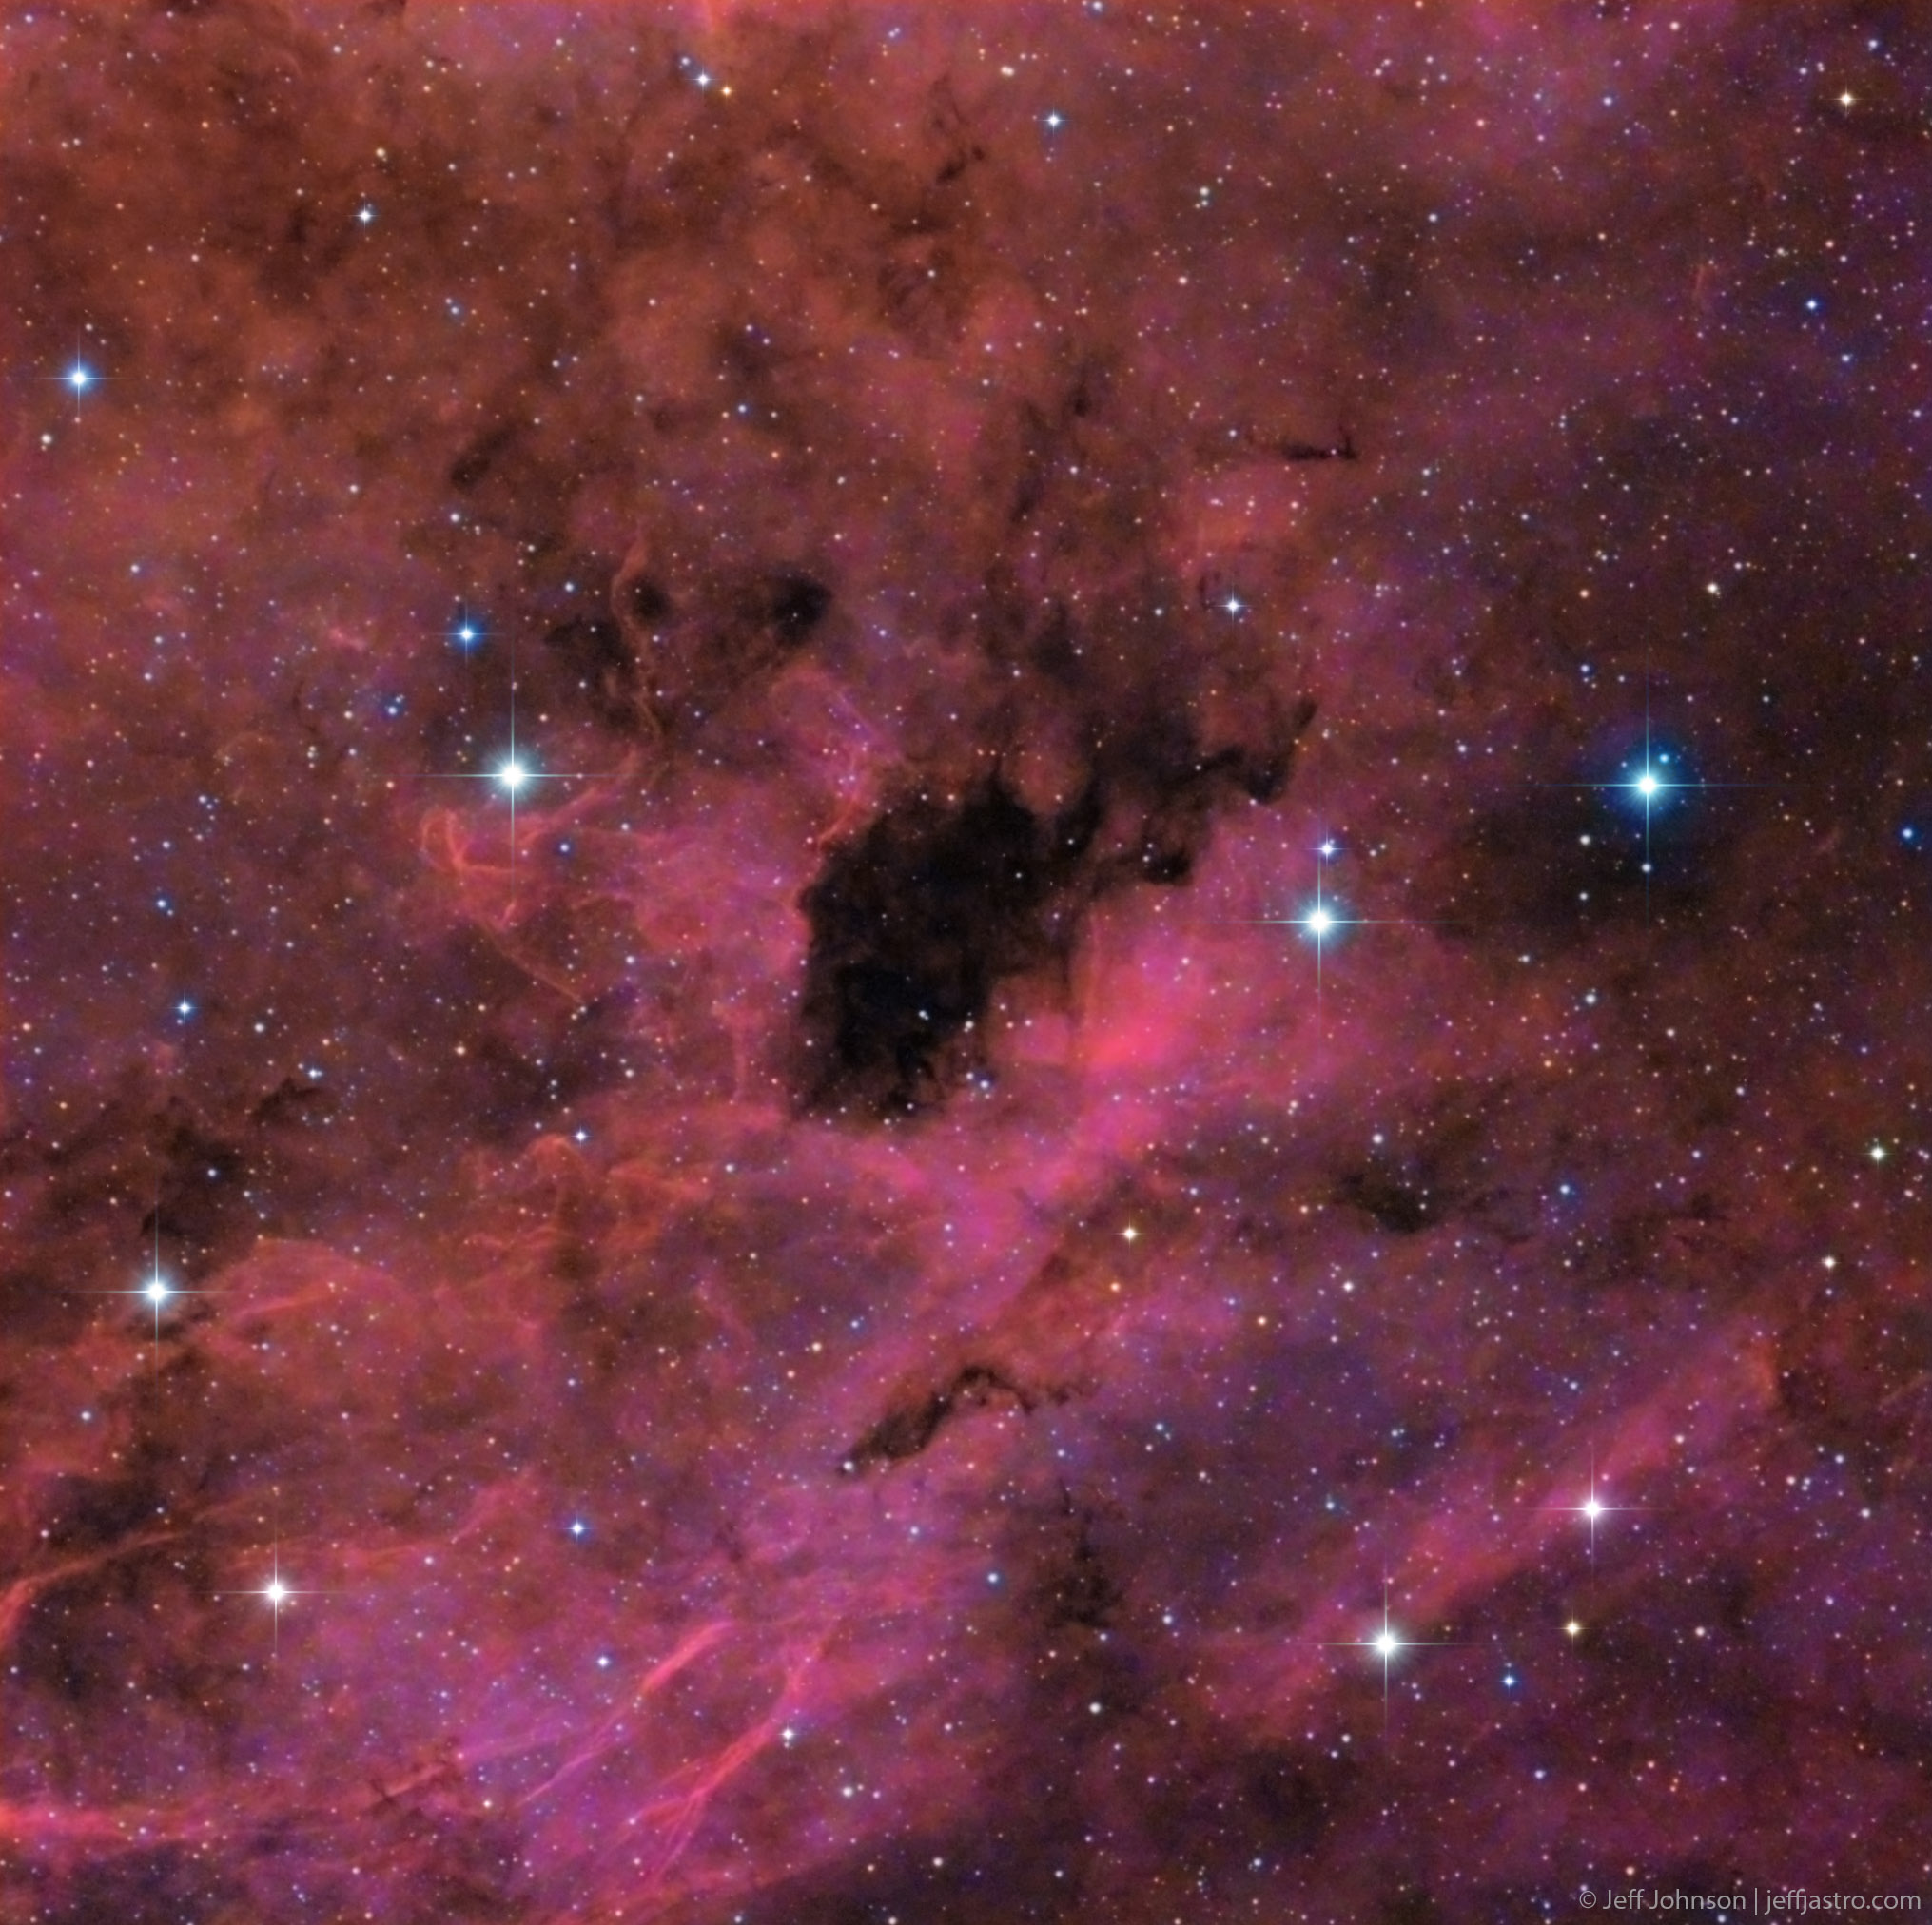 Dark Nebula Glows Red in Amateur Astronomer's Photo